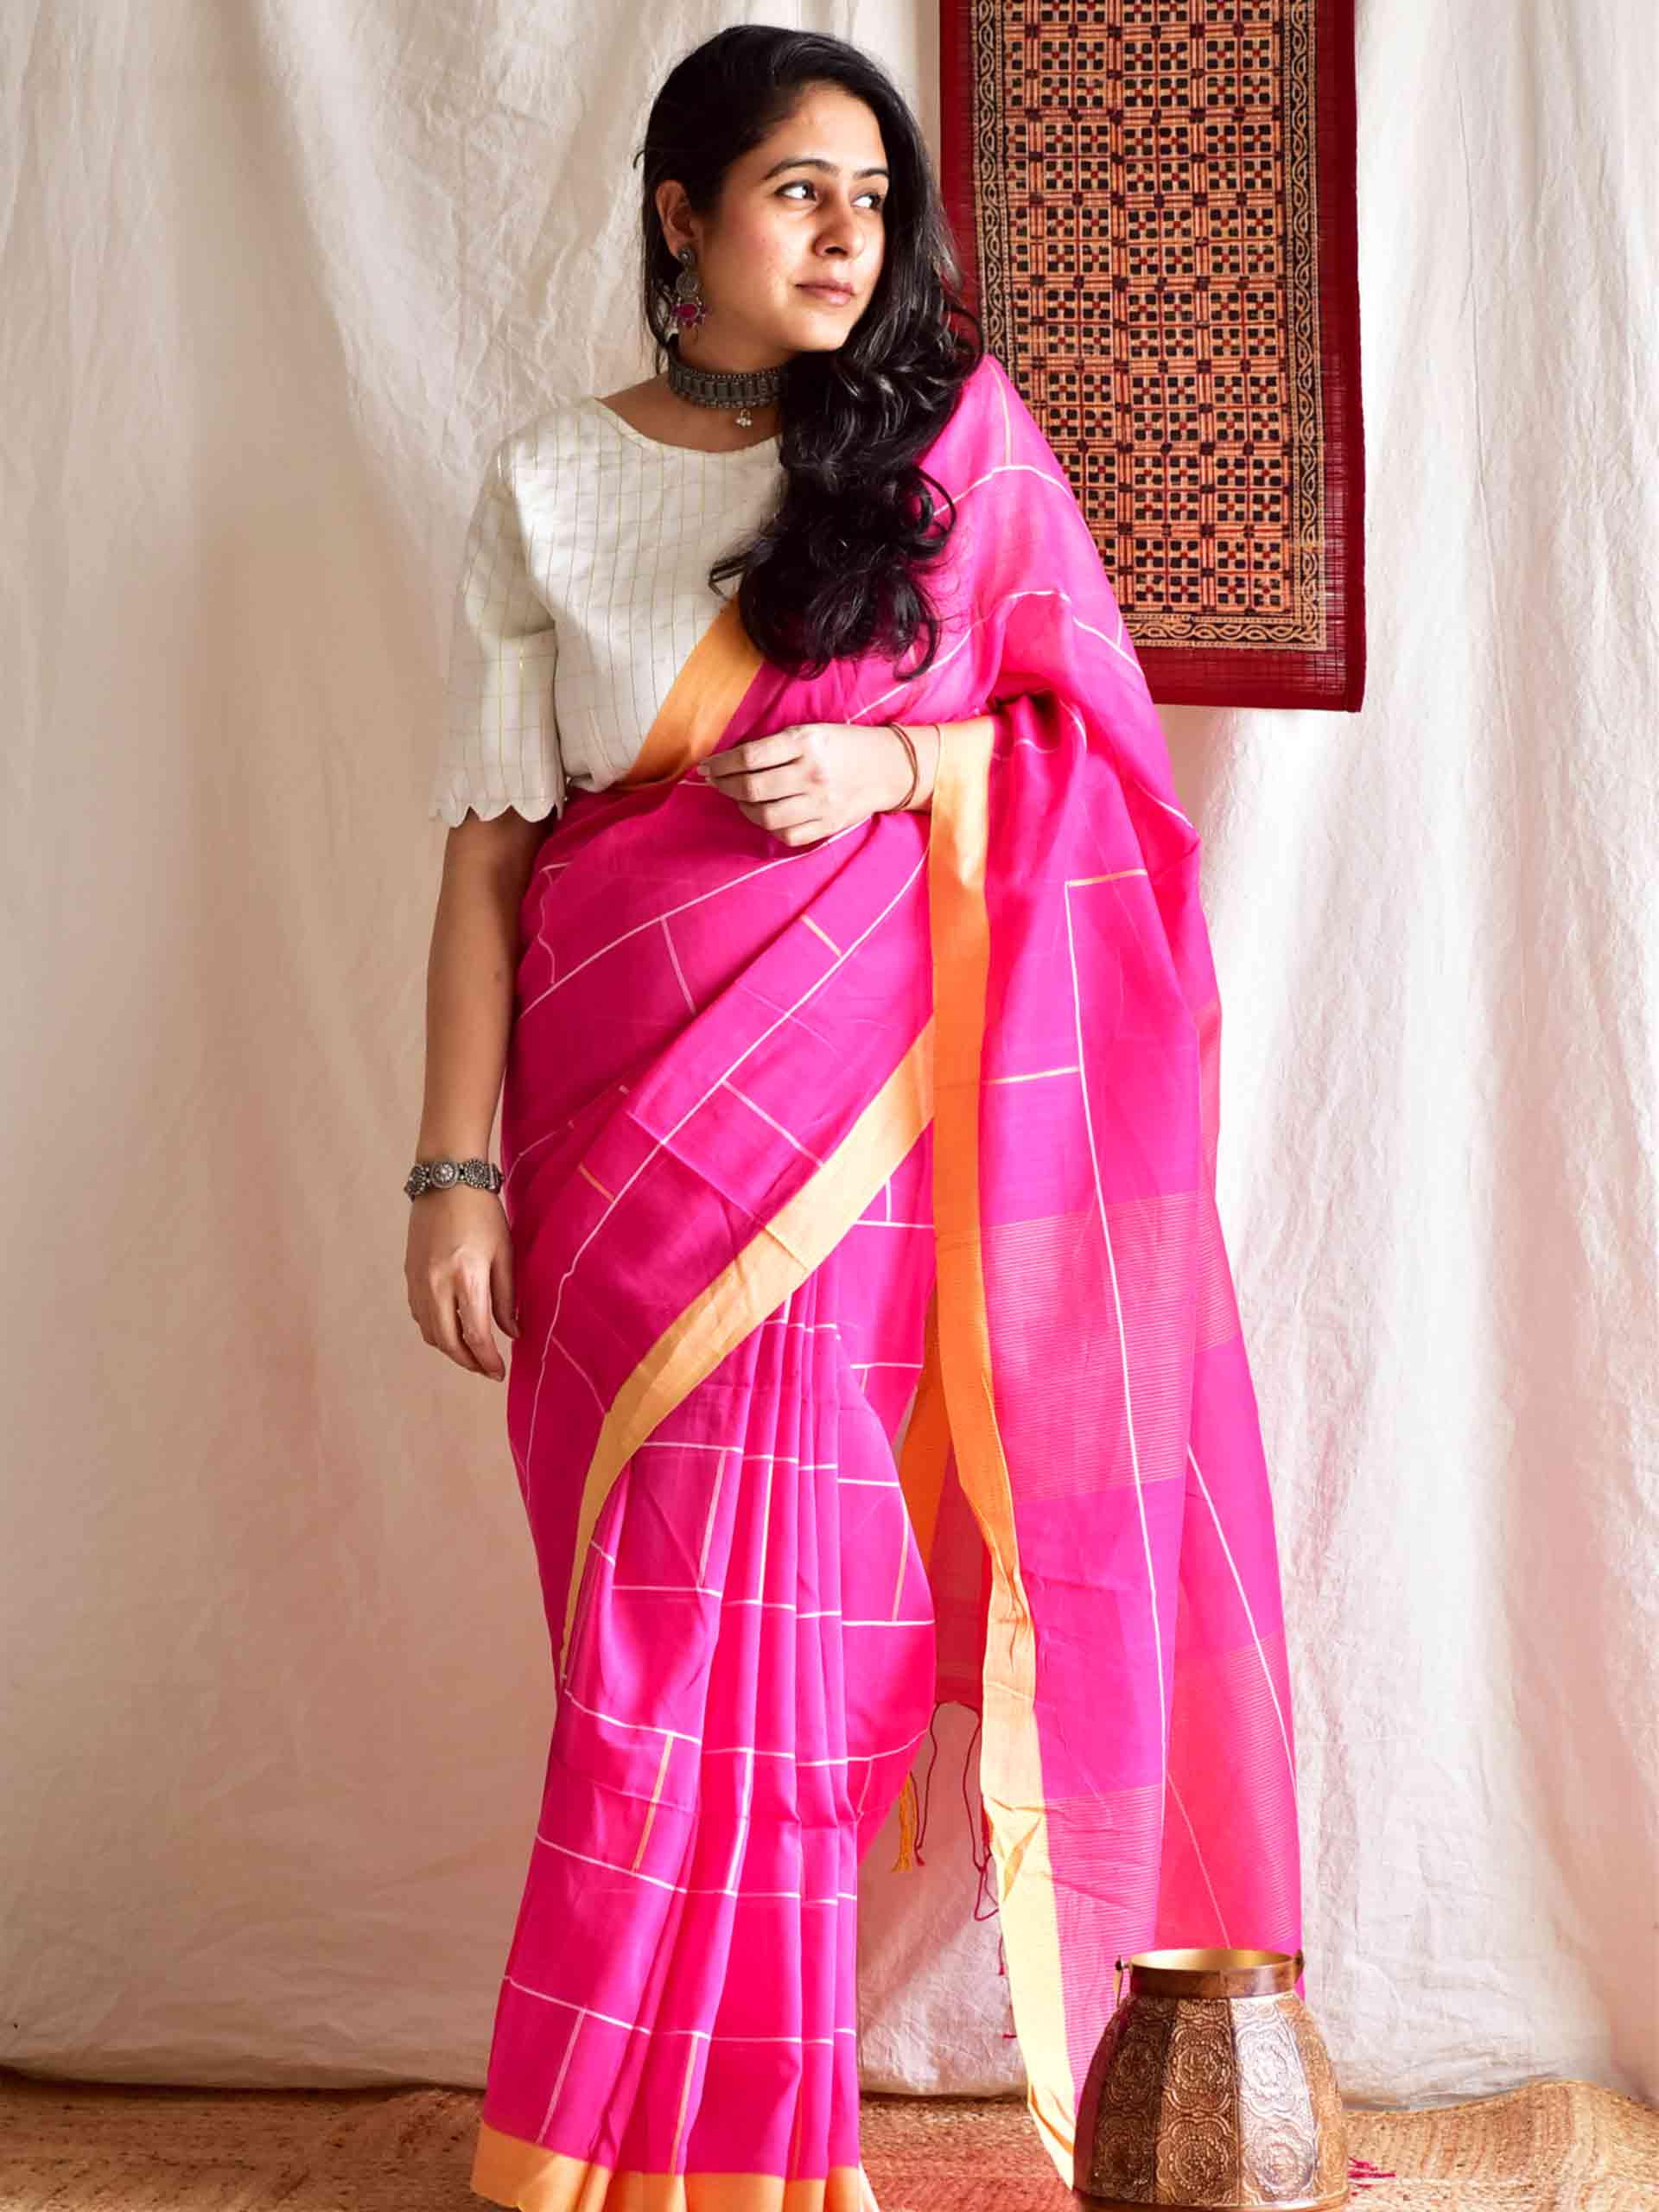 petals - handloom cotton saree